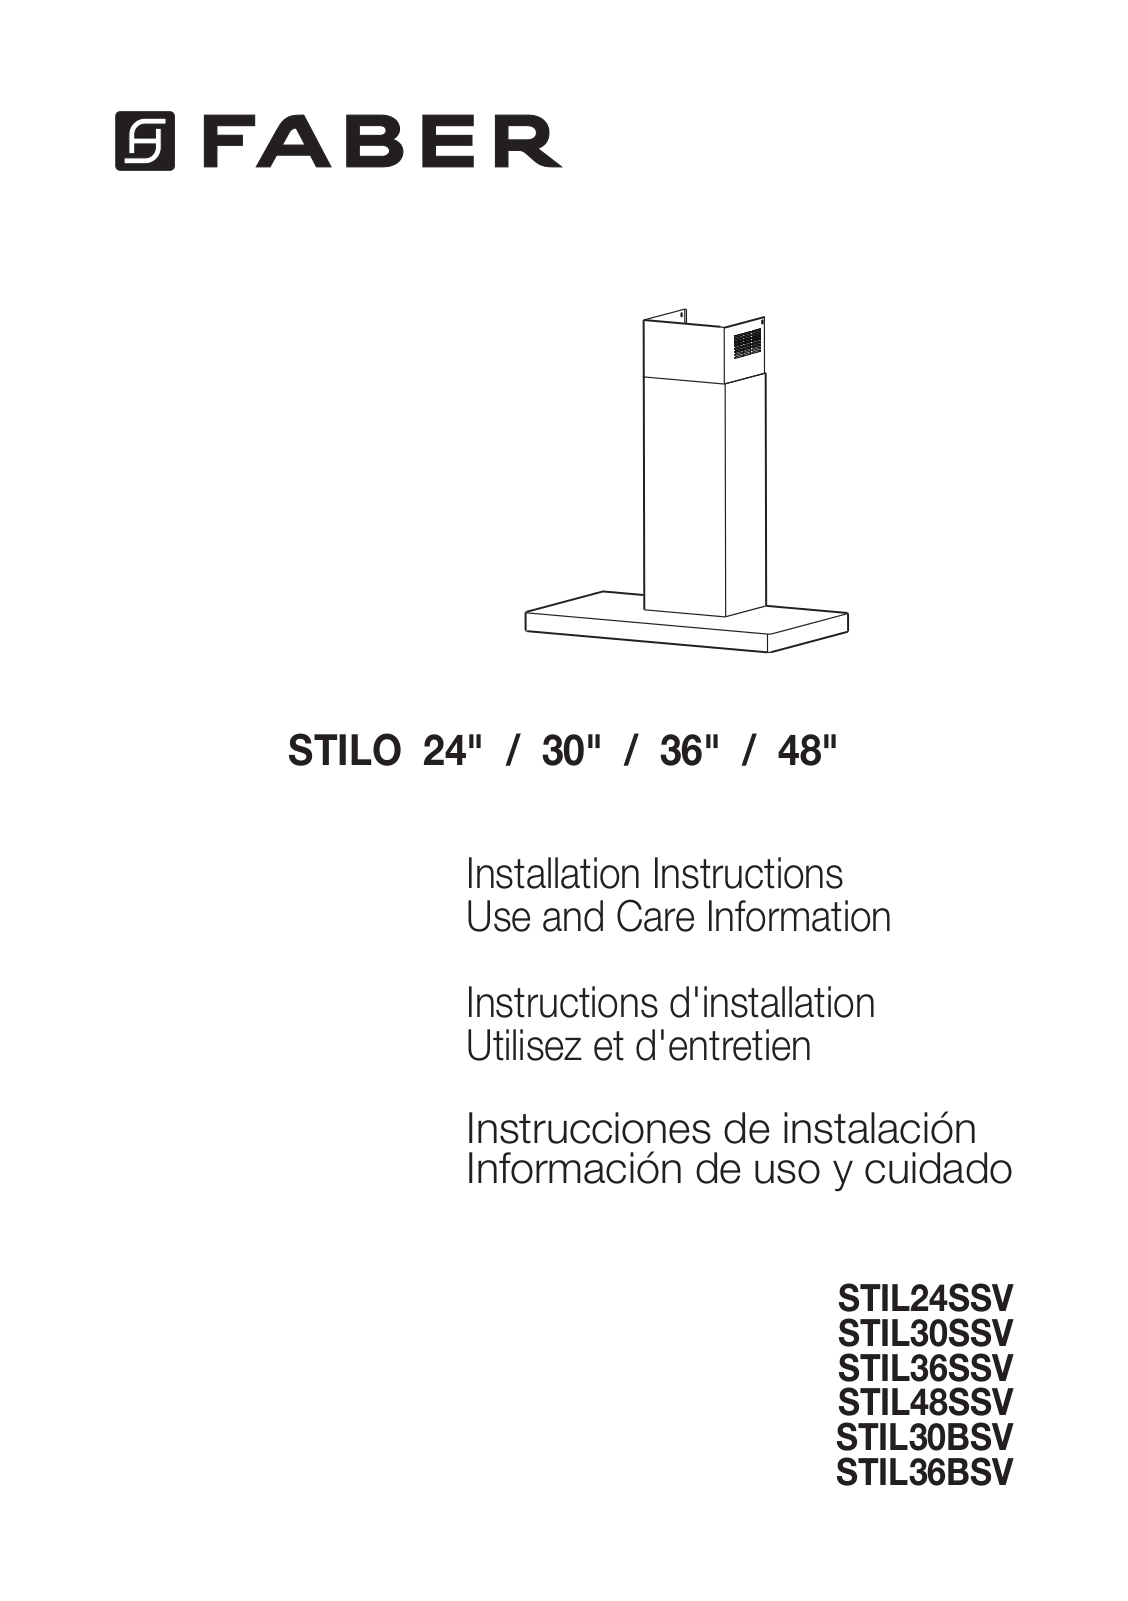 Faber STIL30SSV, STIL30BSV Installation manual